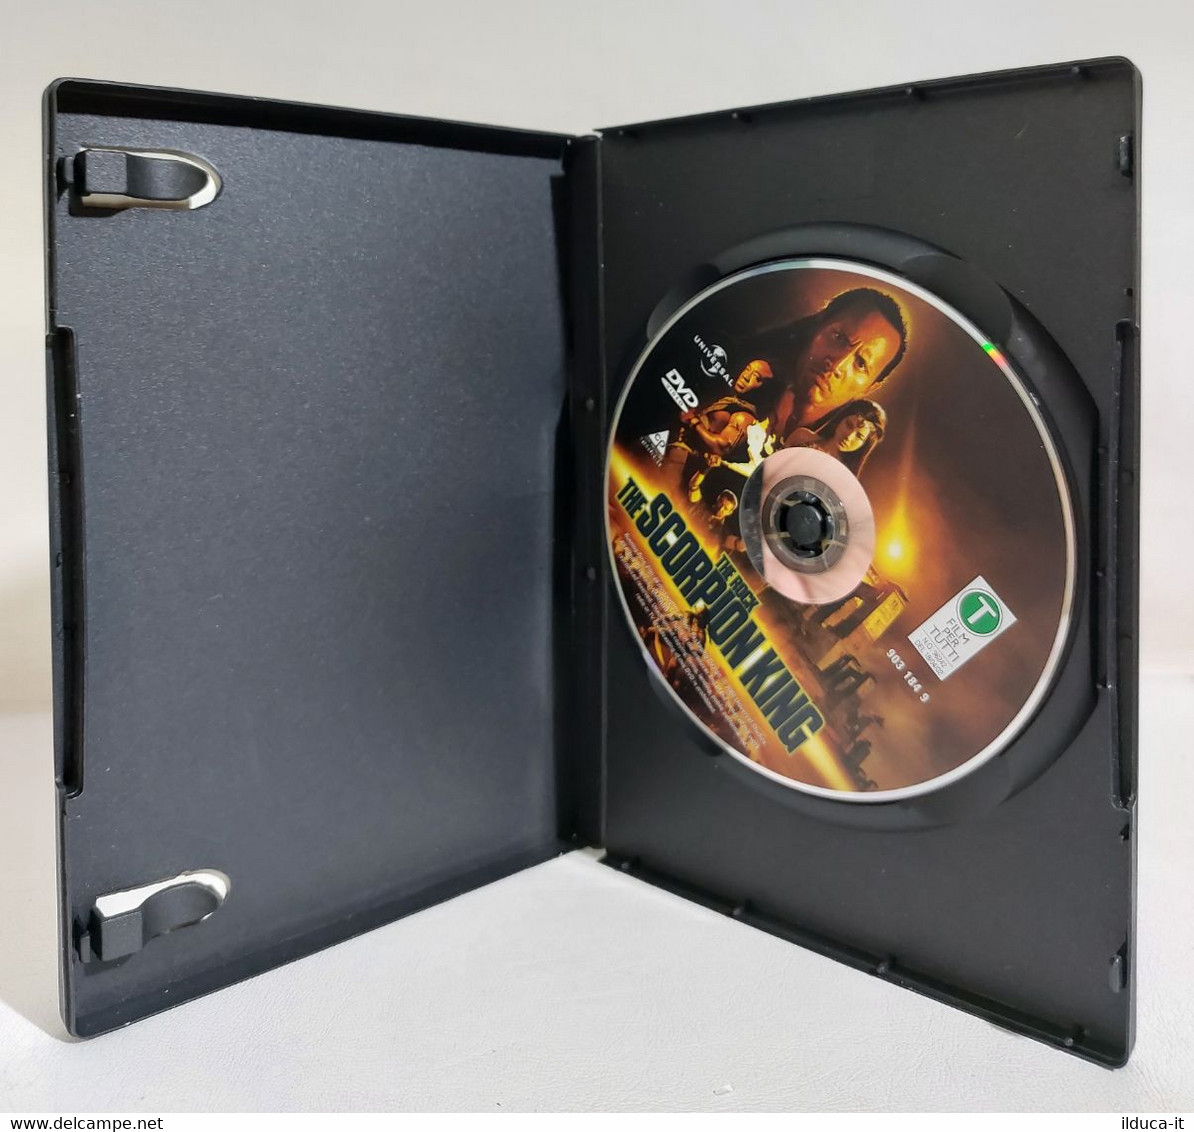 I109610 DVD - IL RE SCORPIONE - Chuck Russell - Dwayne Johnson Steven Brand 2002 - Action, Aventure